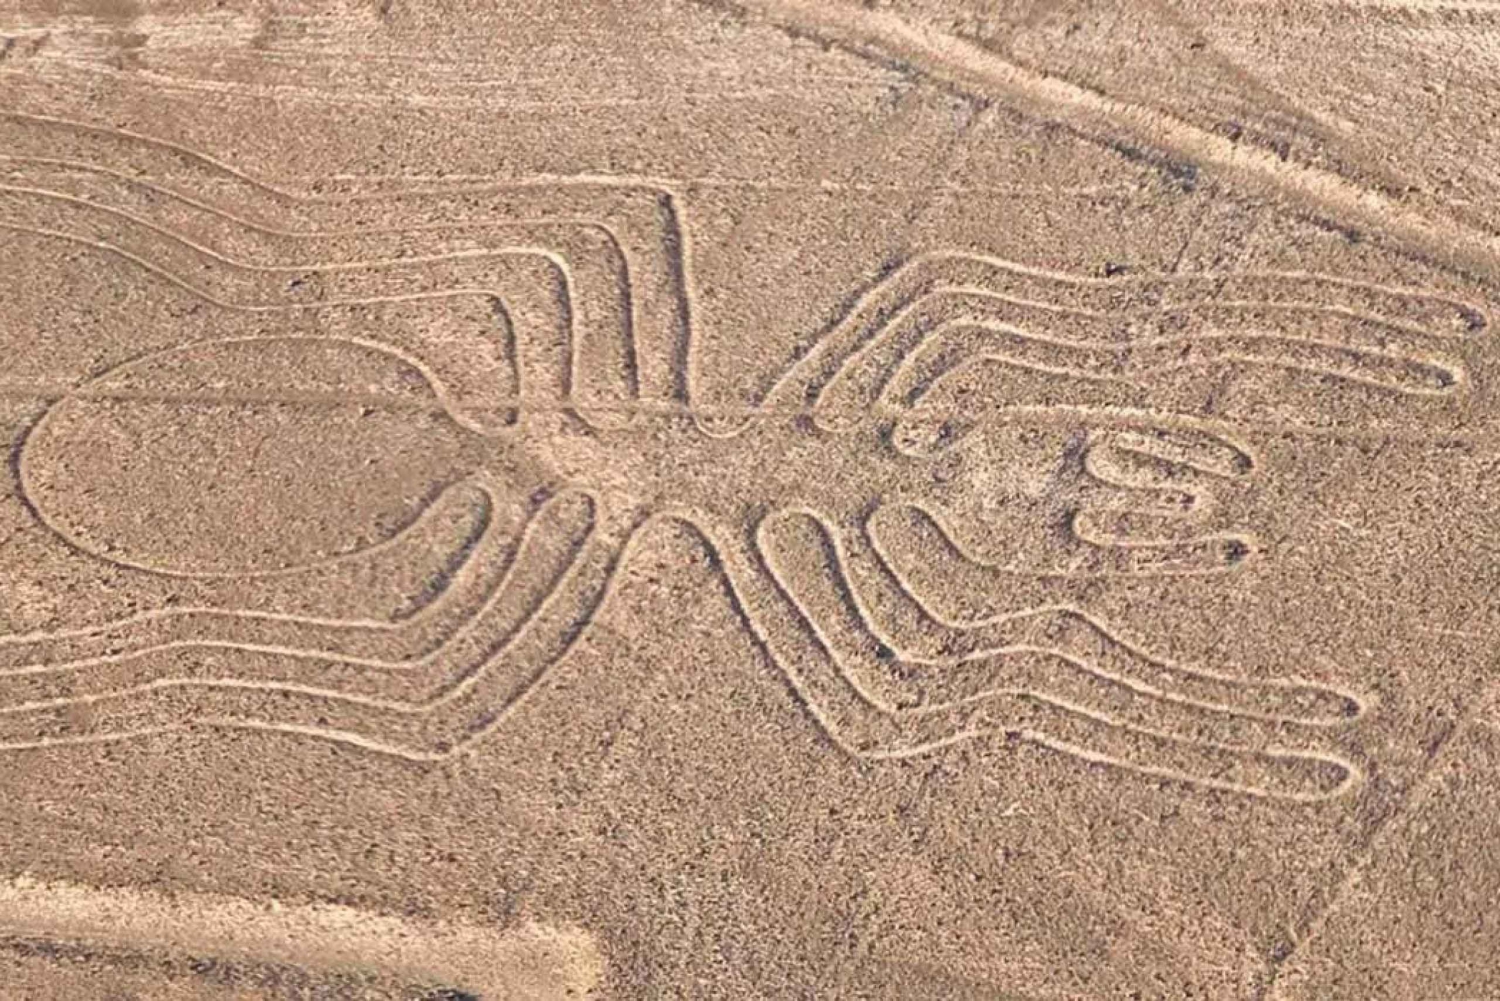 Giro in aereo sulle linee di Nazca